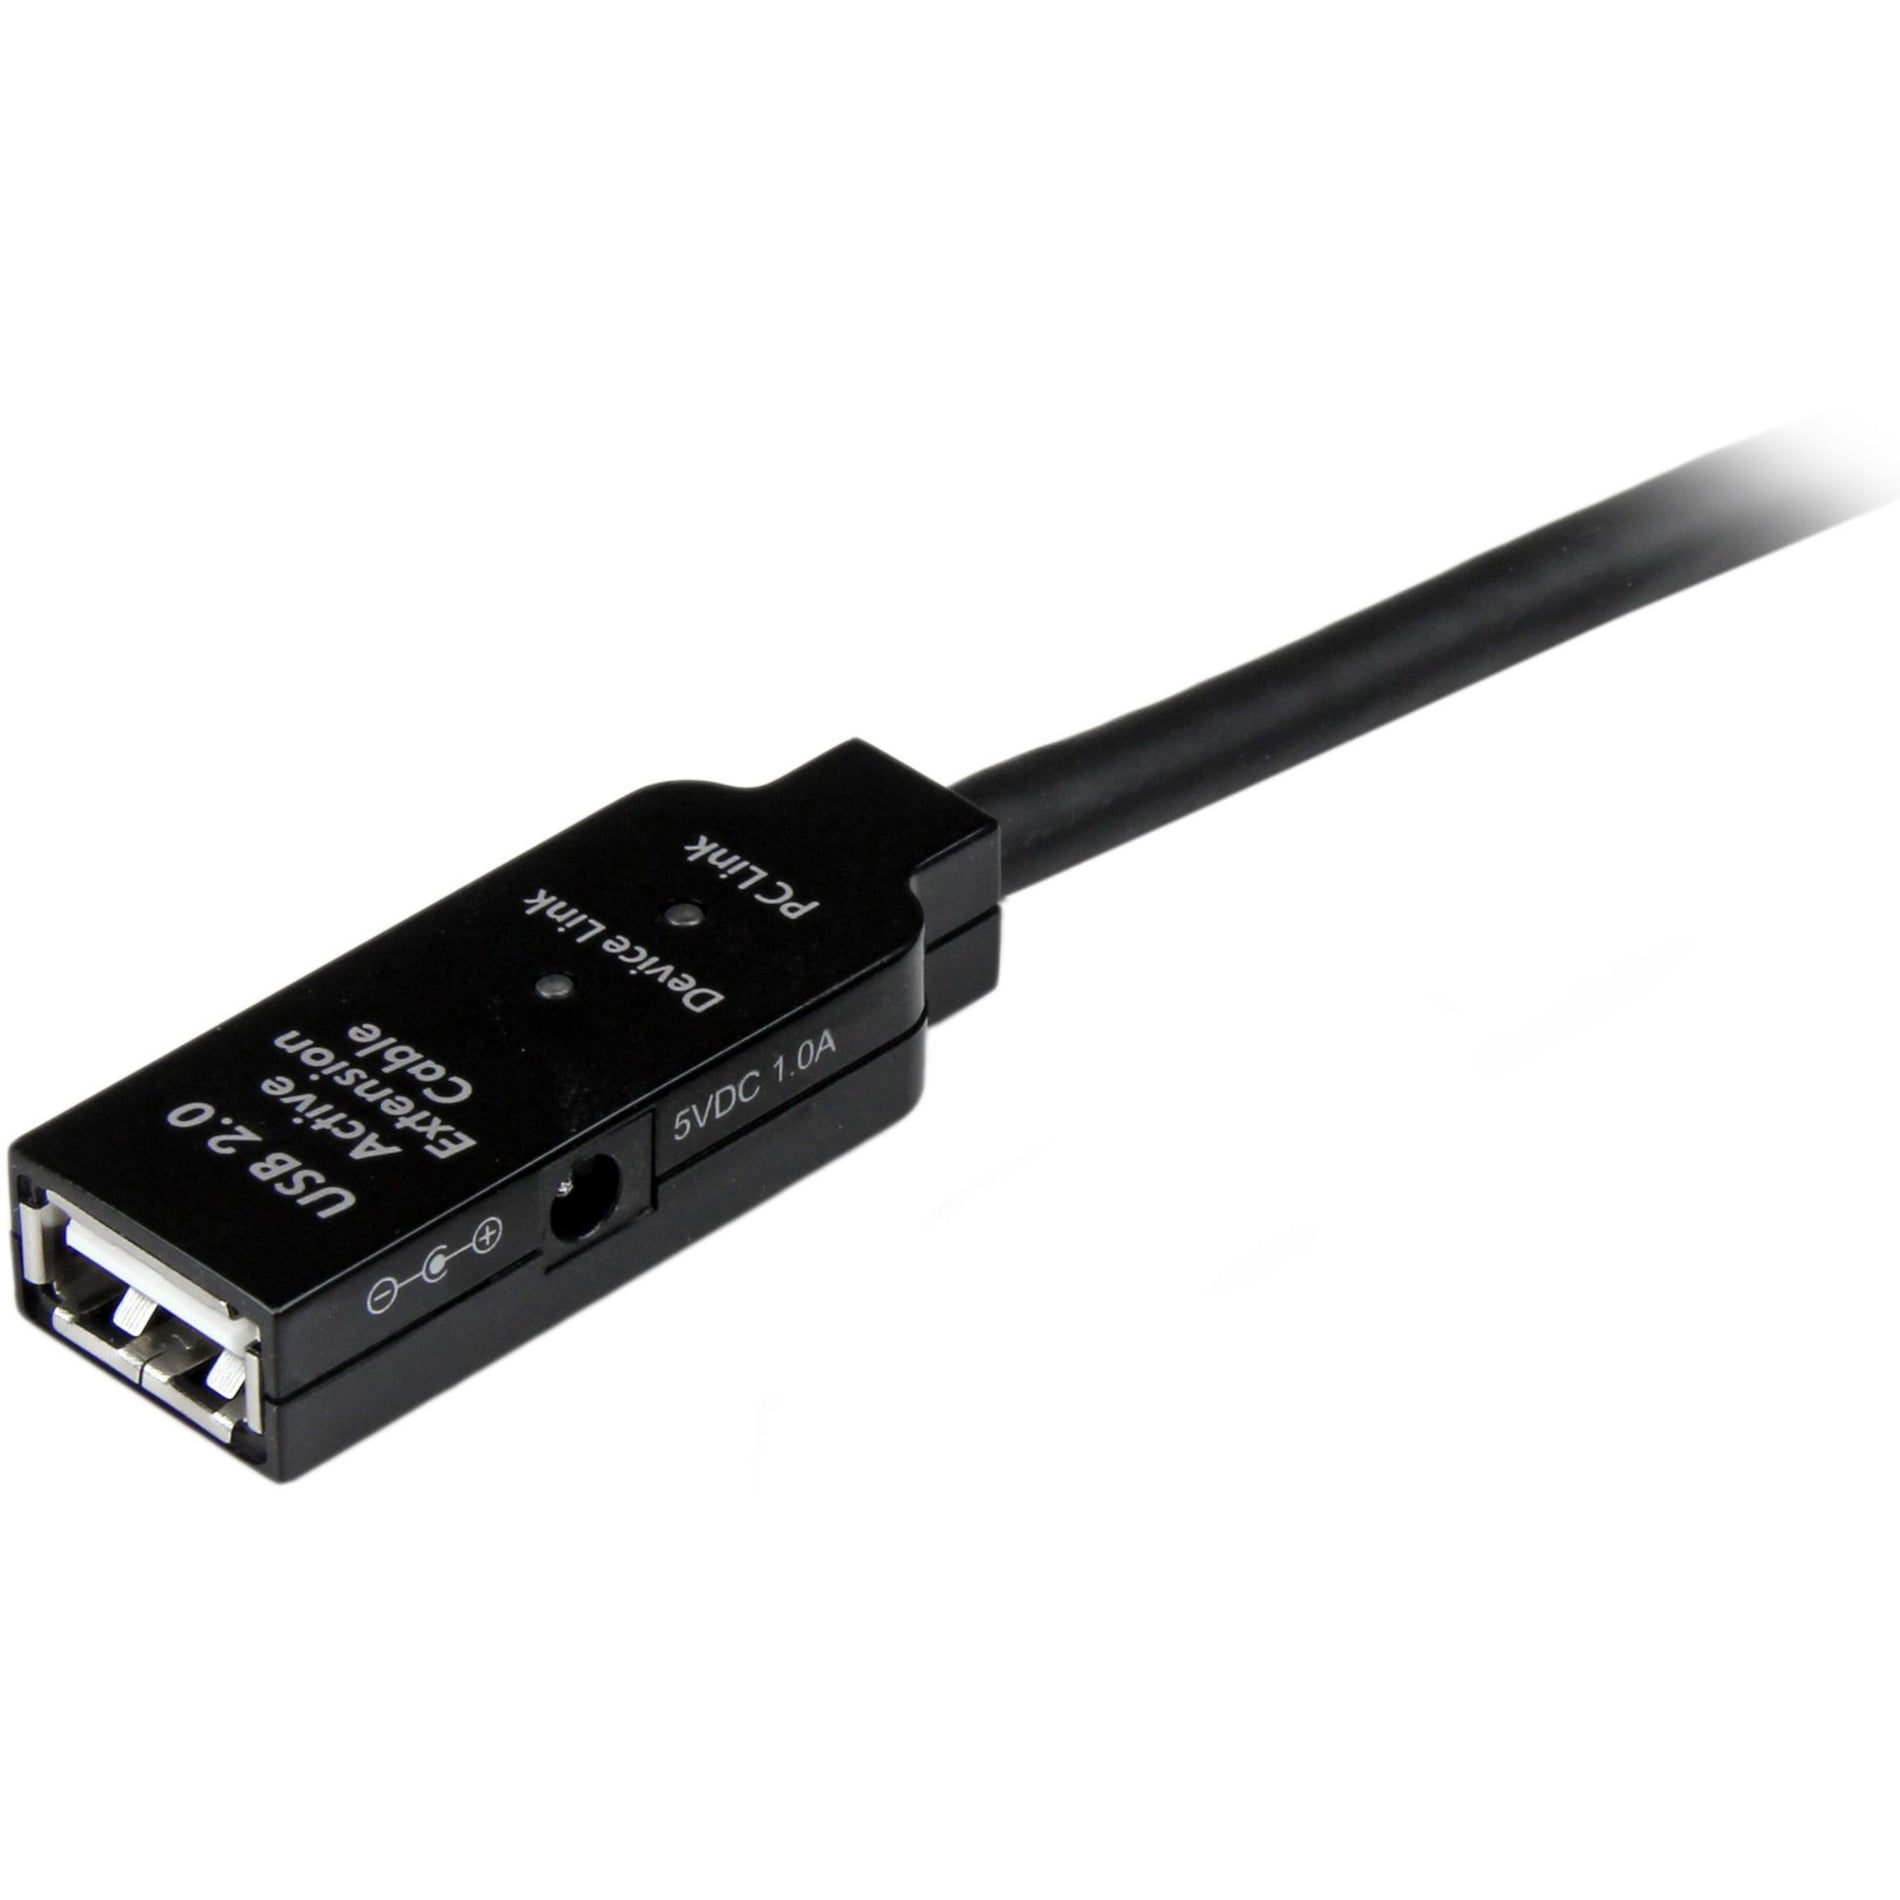 StarTech.com USB2AAEXT35M 35m USB 2.0 Active Extension Cable - M/F, 114.83 ft Data Transfer Cable, 480 Mbit/s, Black